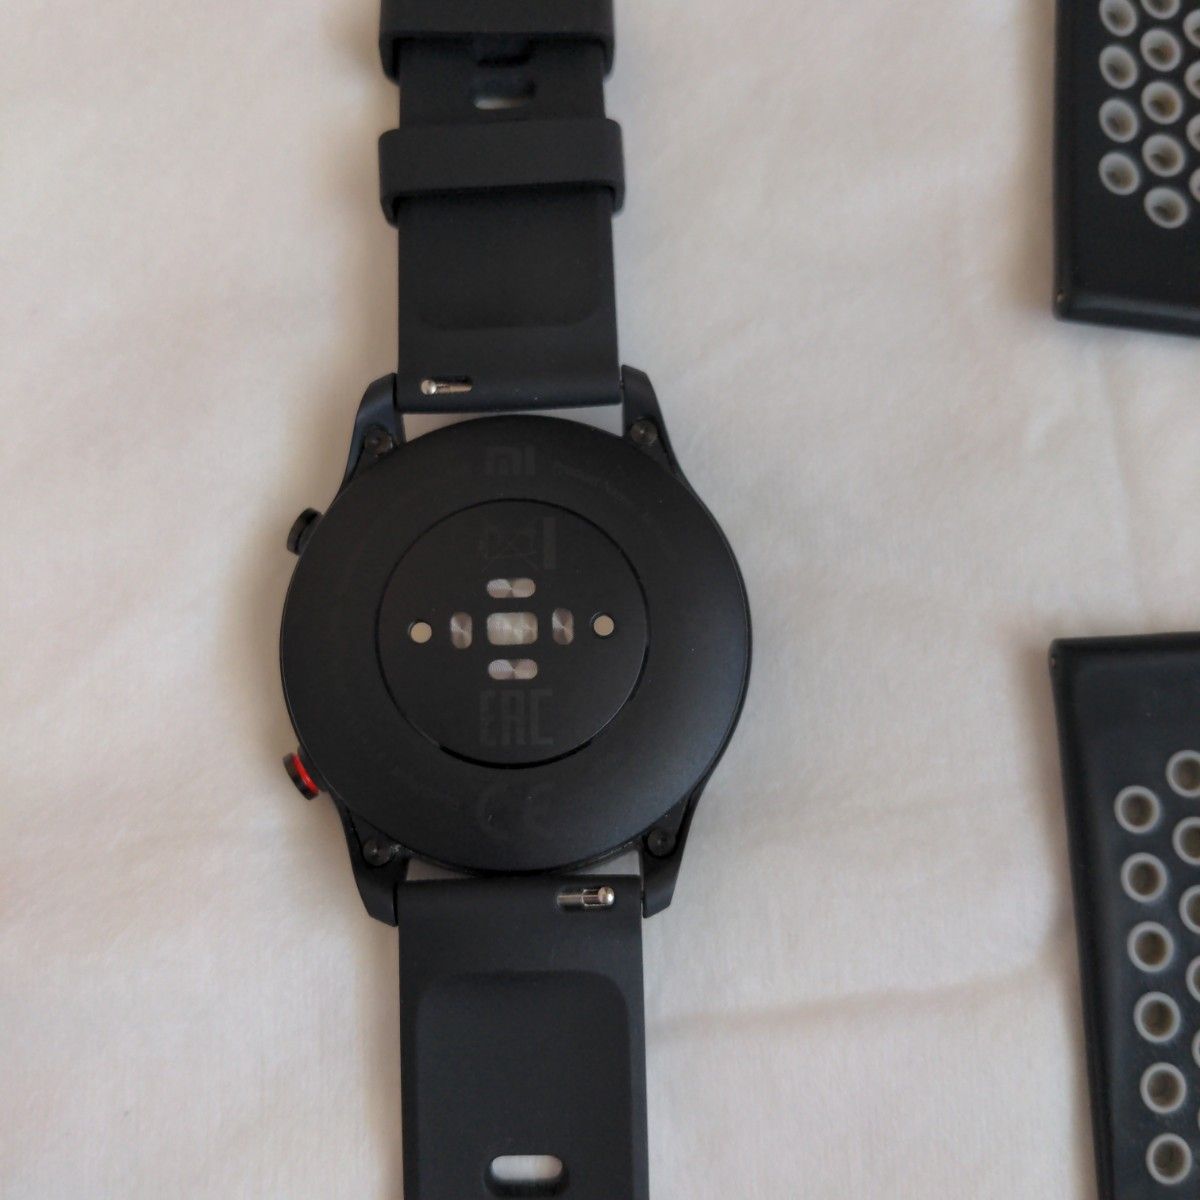 Xiaomi Mi Watch ランニング GPS スマートウォッチ  ベルト付き トレーニング 睡眠記録  活動計 ウォーキング